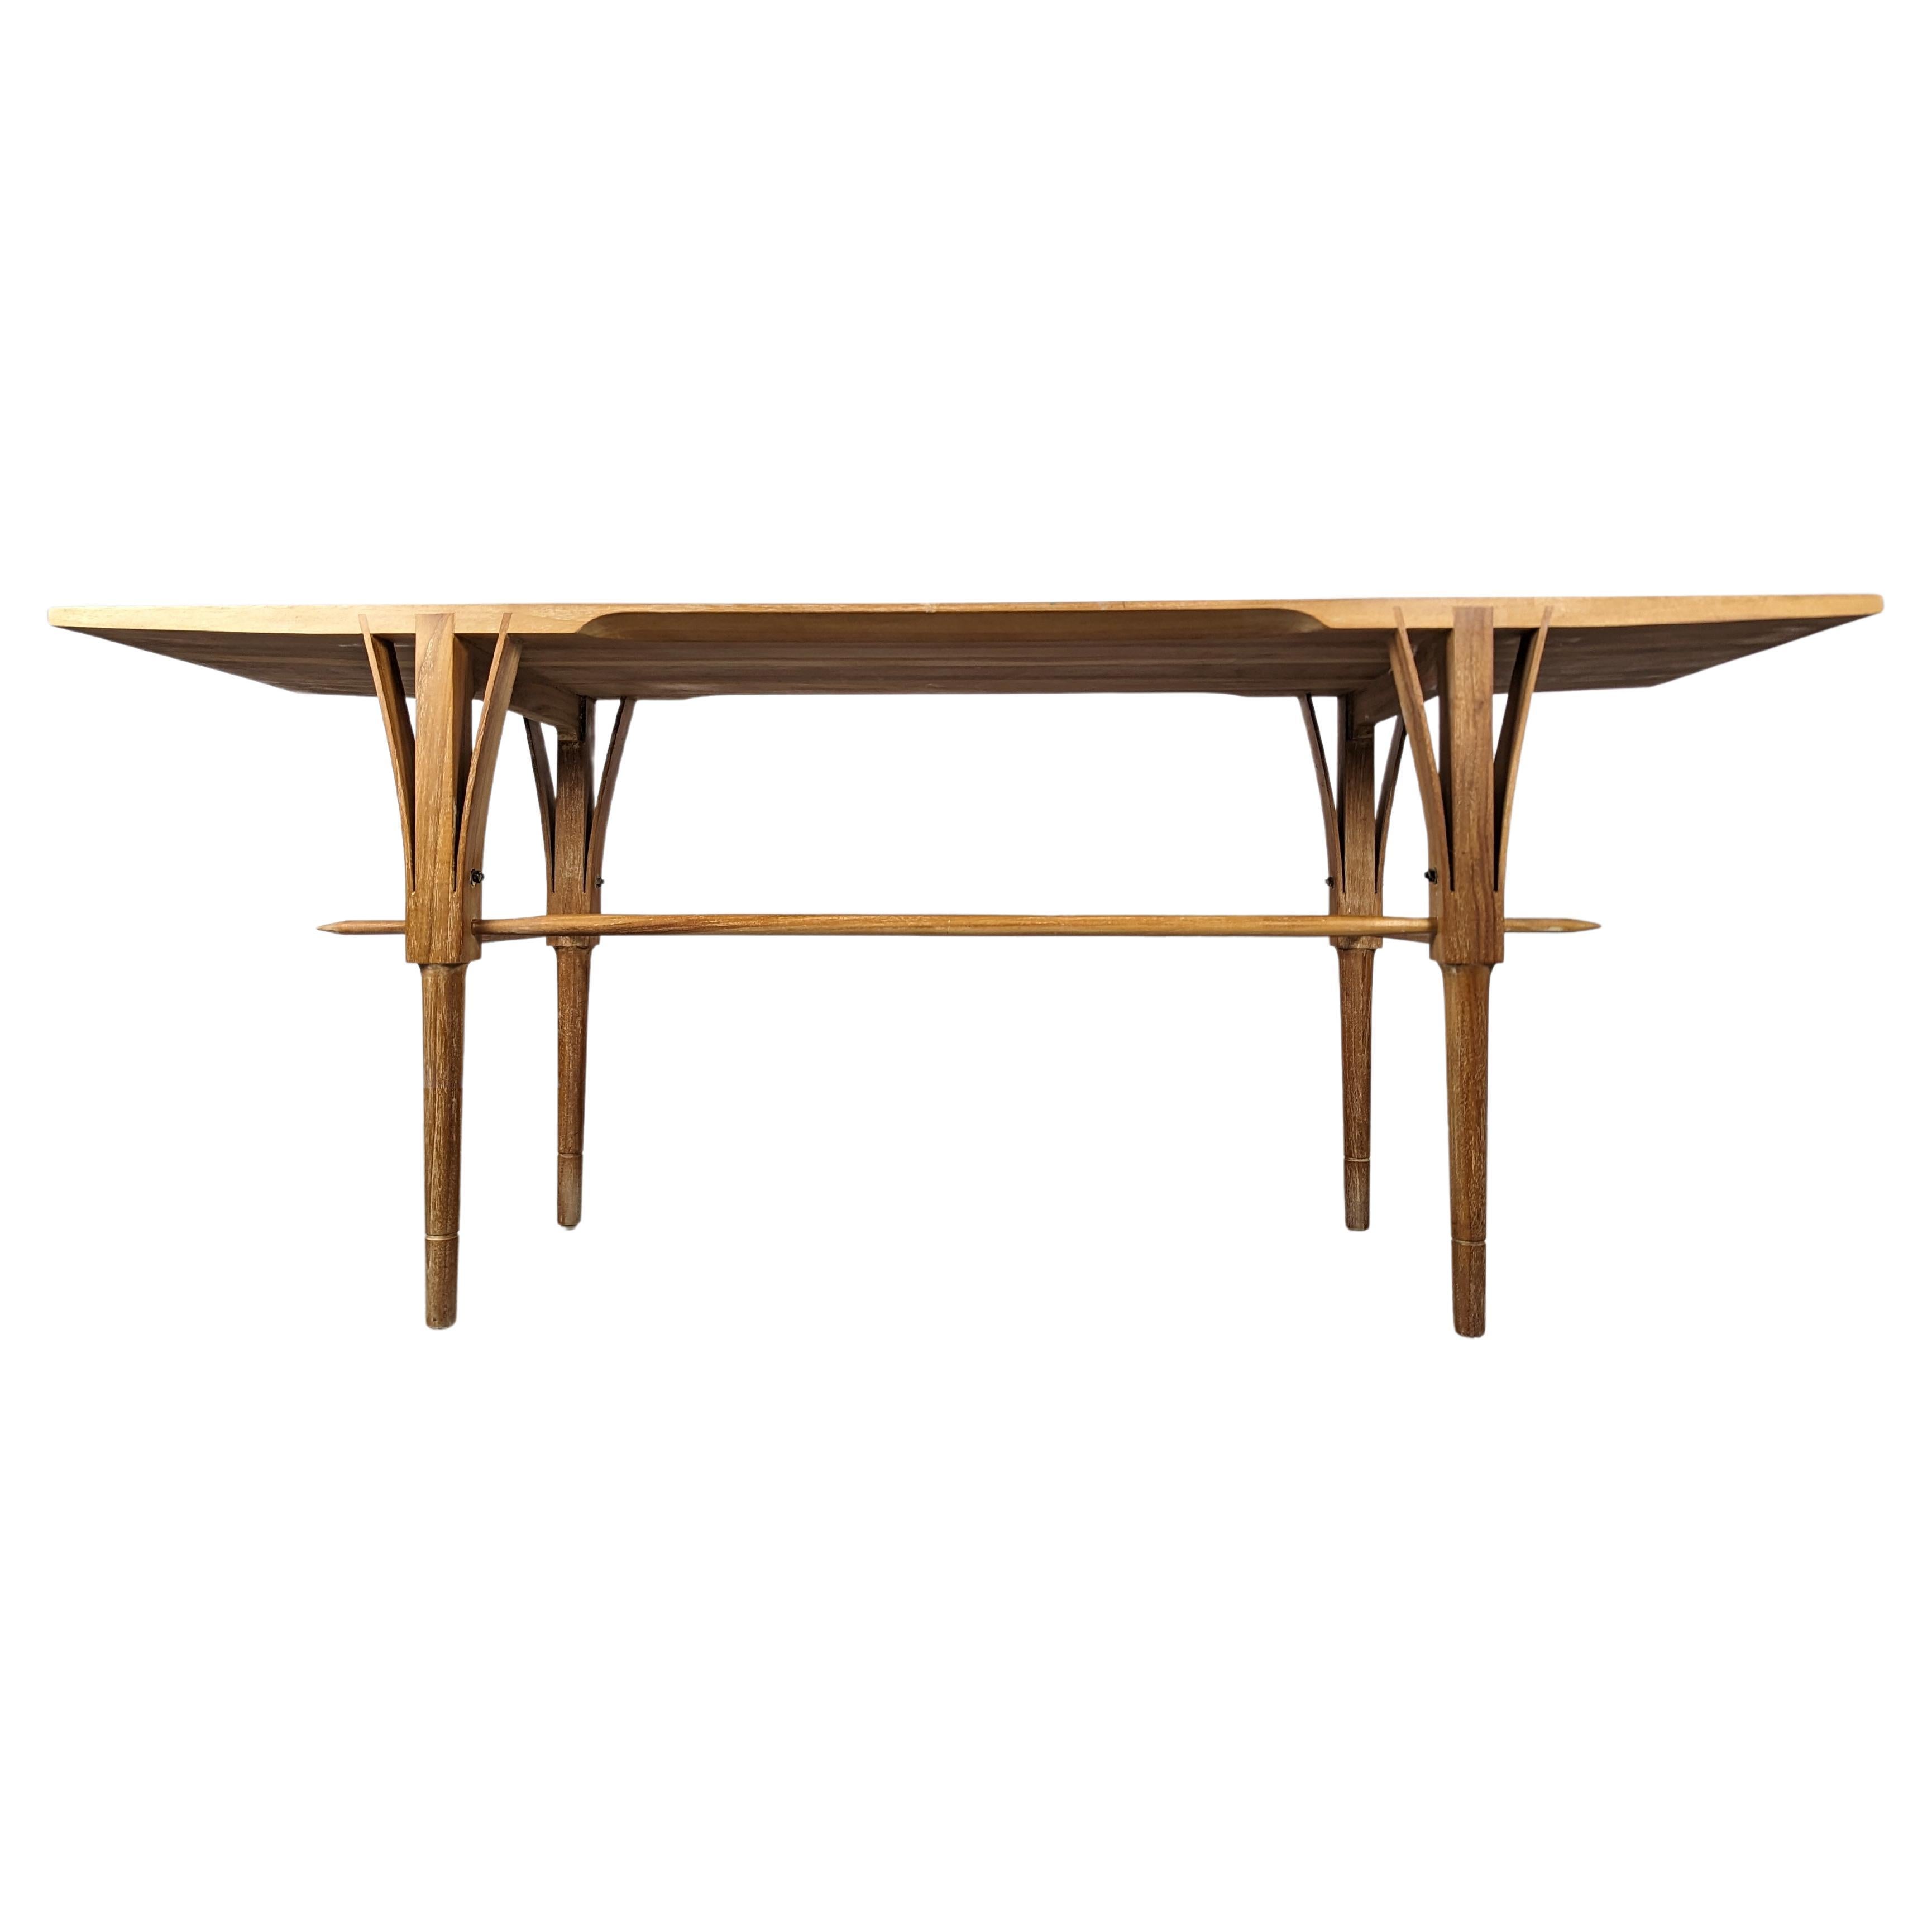 Danish desk table by Sven Ellekaer 1960s For Sale